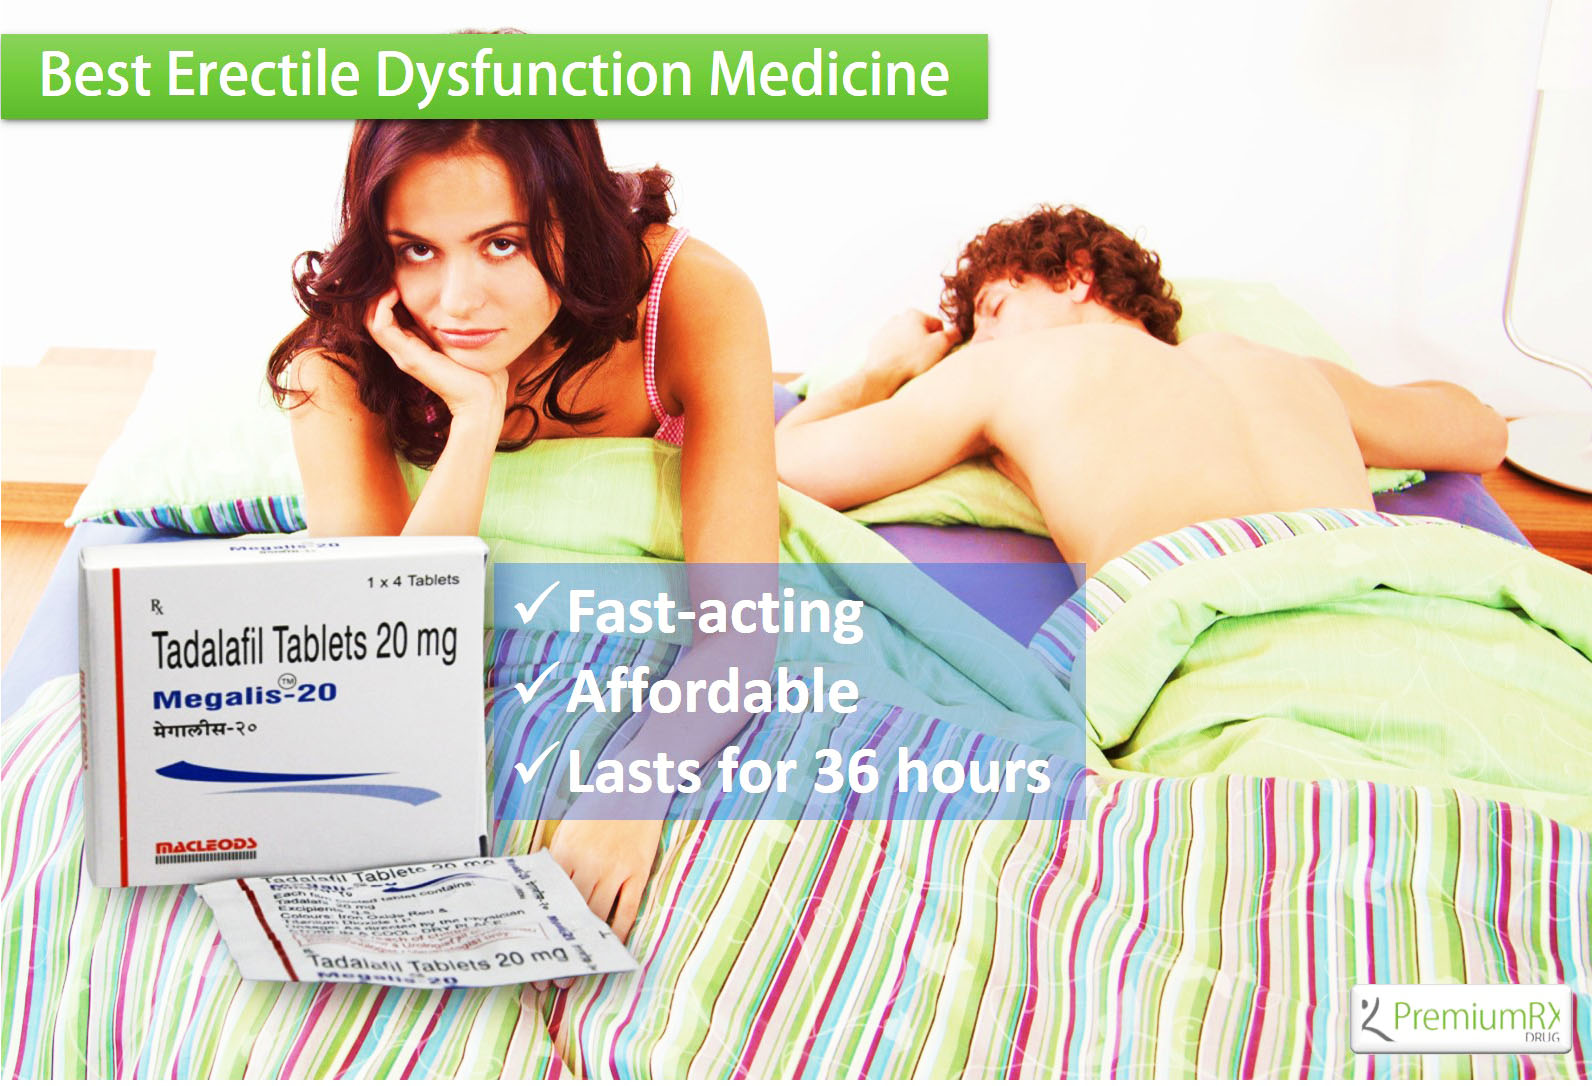 Erectile Dysfunction Medicine Contains Tadalafil